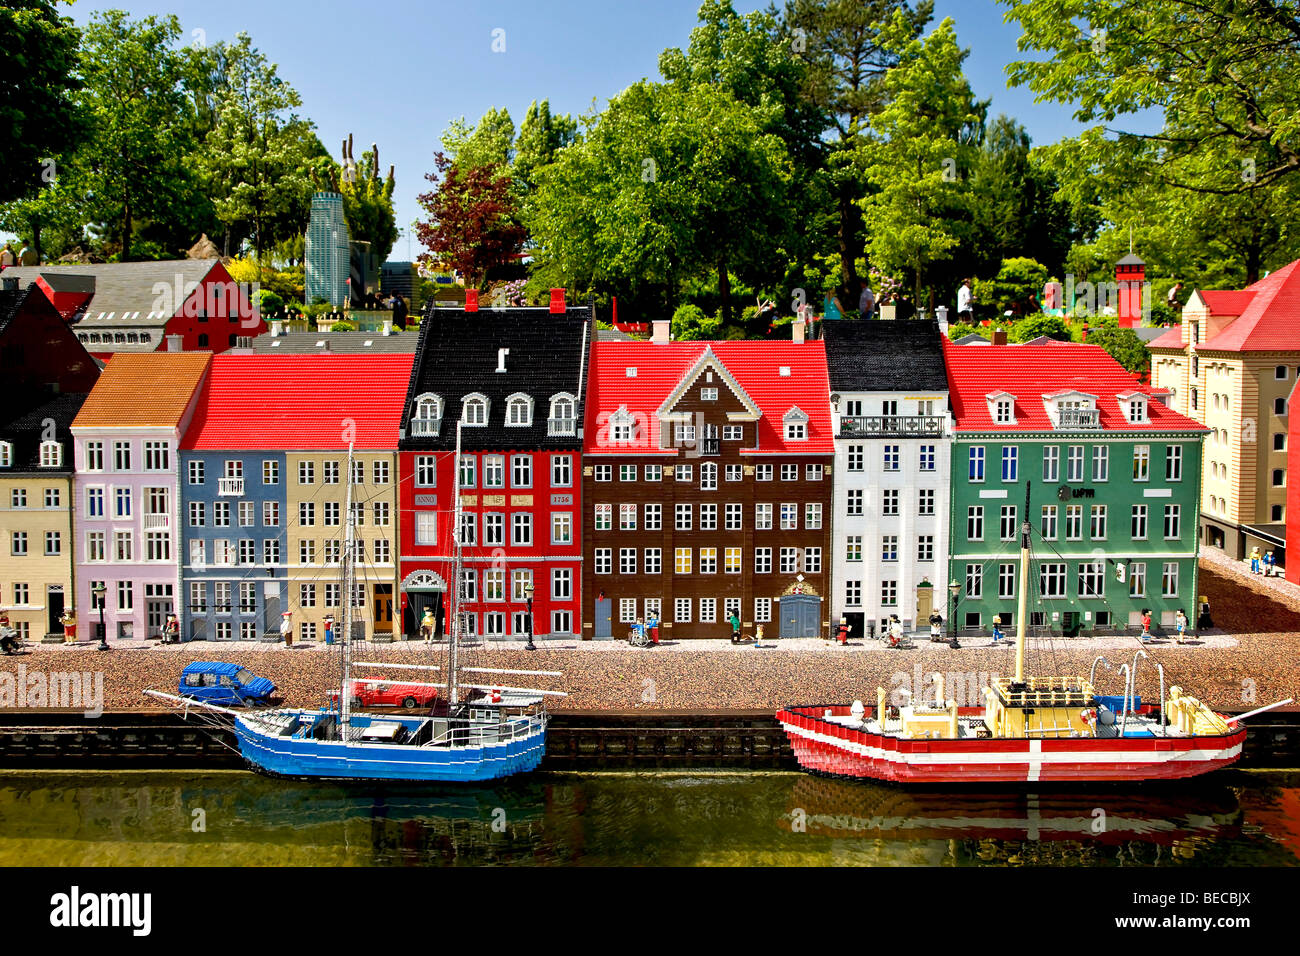 Nyhavn made from lego bricks, Legoland, Denmark Stock Photo